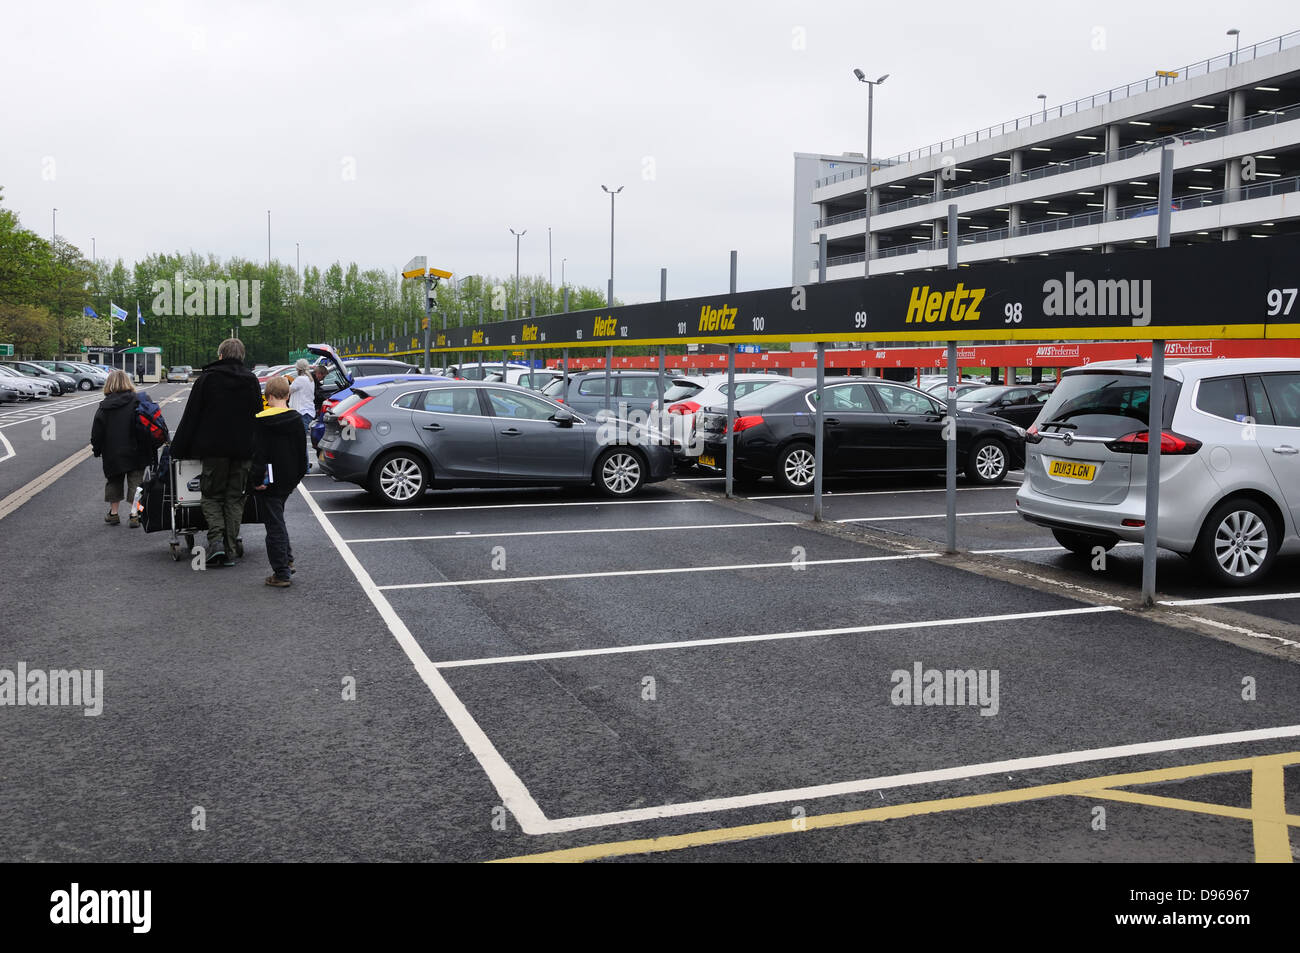 Car rental car park at Glasgow international Airport, Scotland, UK Stock Photo